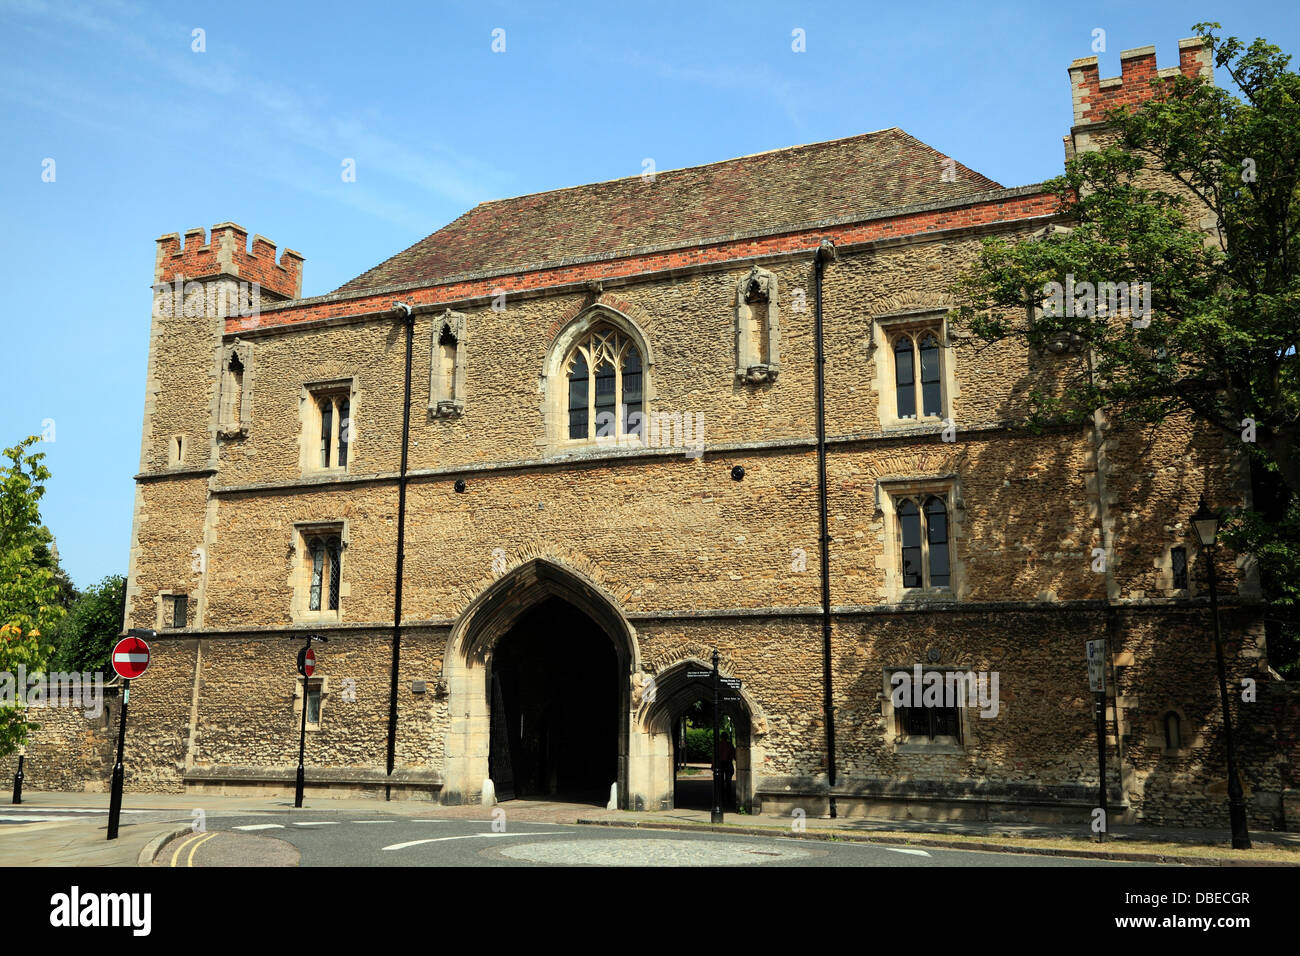 Ely, Cambridgeshire, The Porta, 15th century medieval abbey gate, England UK, English abbeys architecture Stock Photo